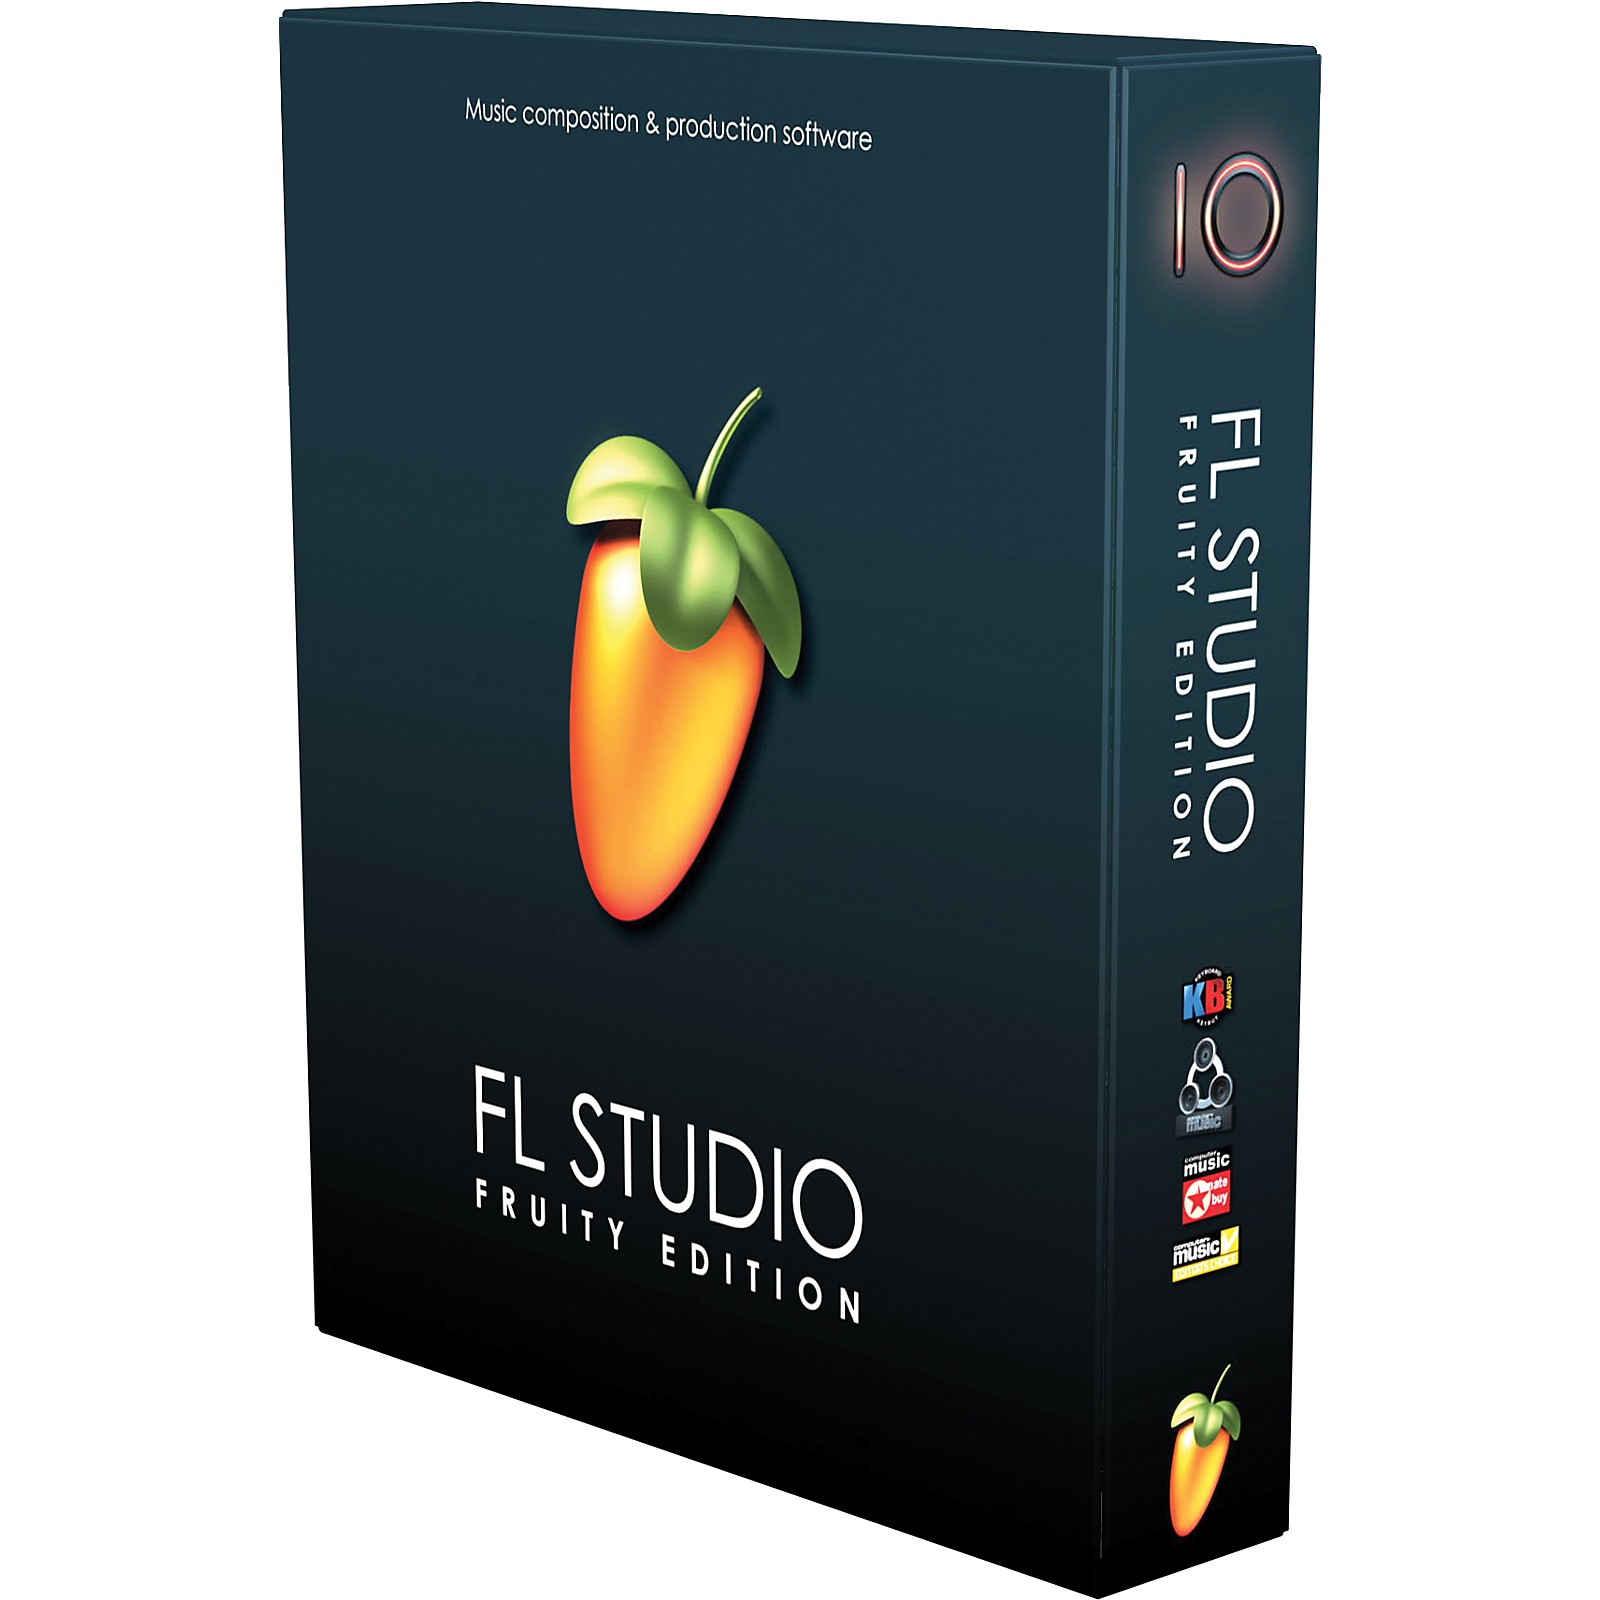 fl studio 11 iso download image free